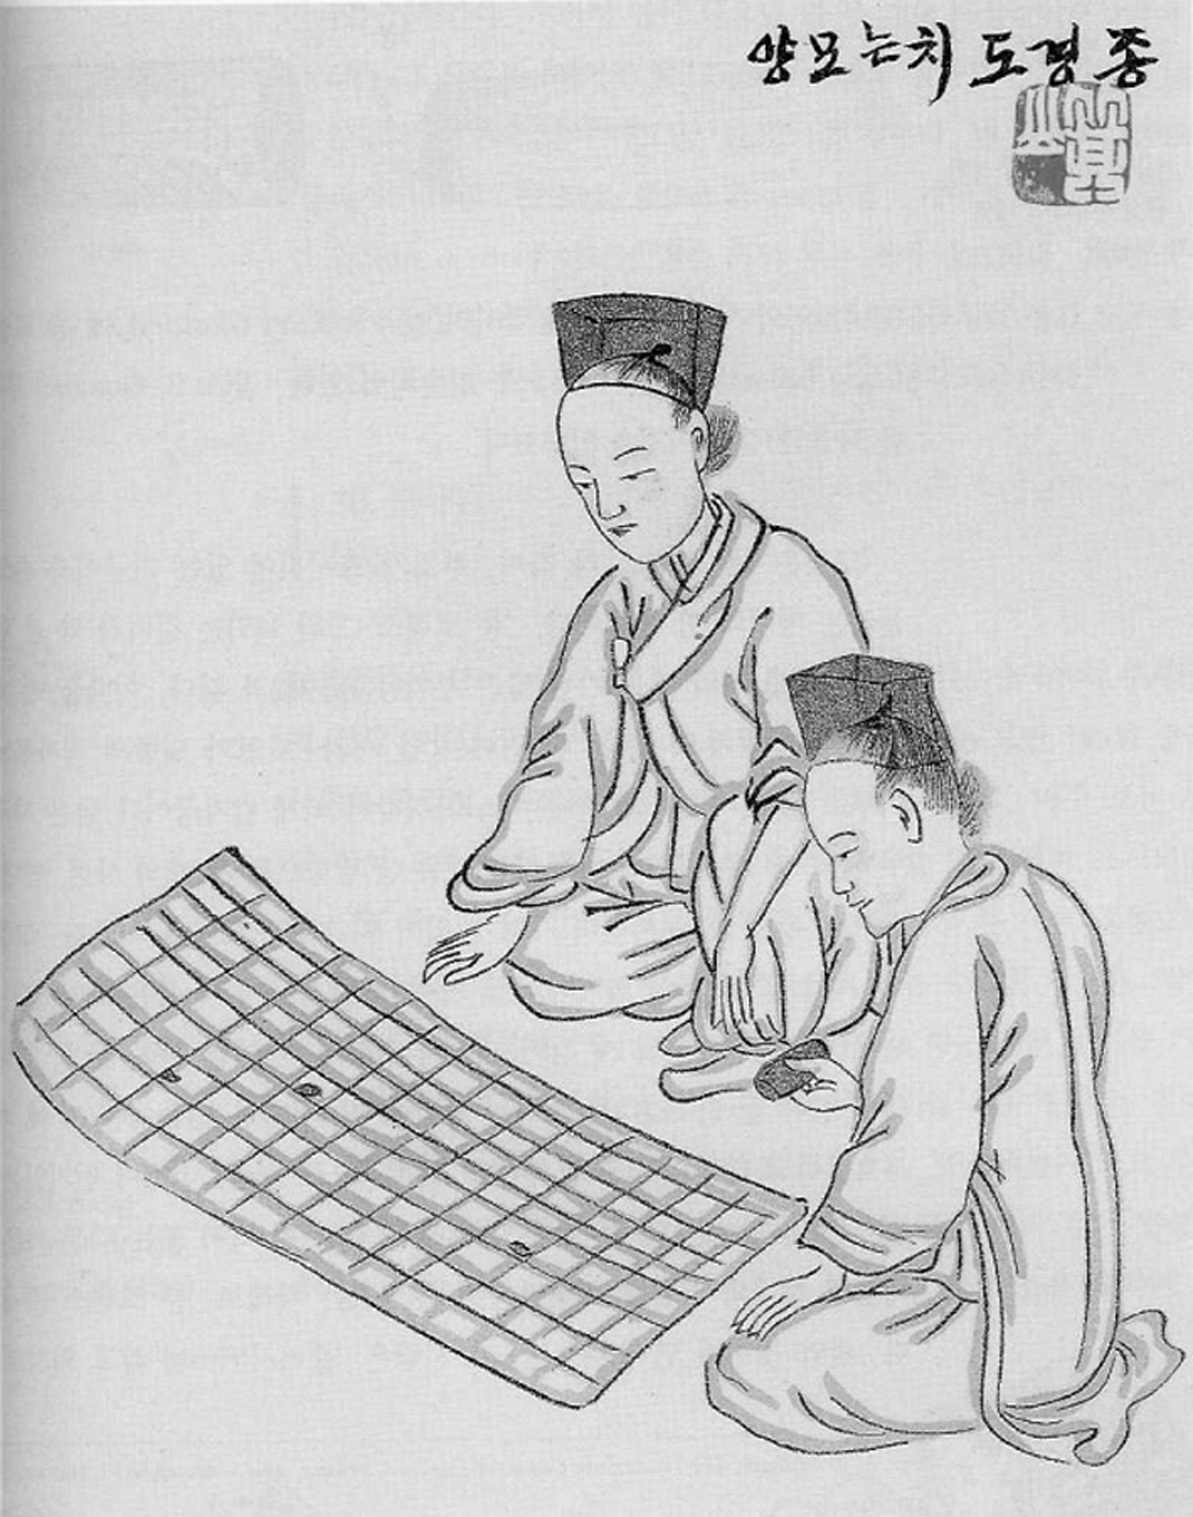 Drawing Jongkung-chart (Korean Games p. 147, Fig. 115).